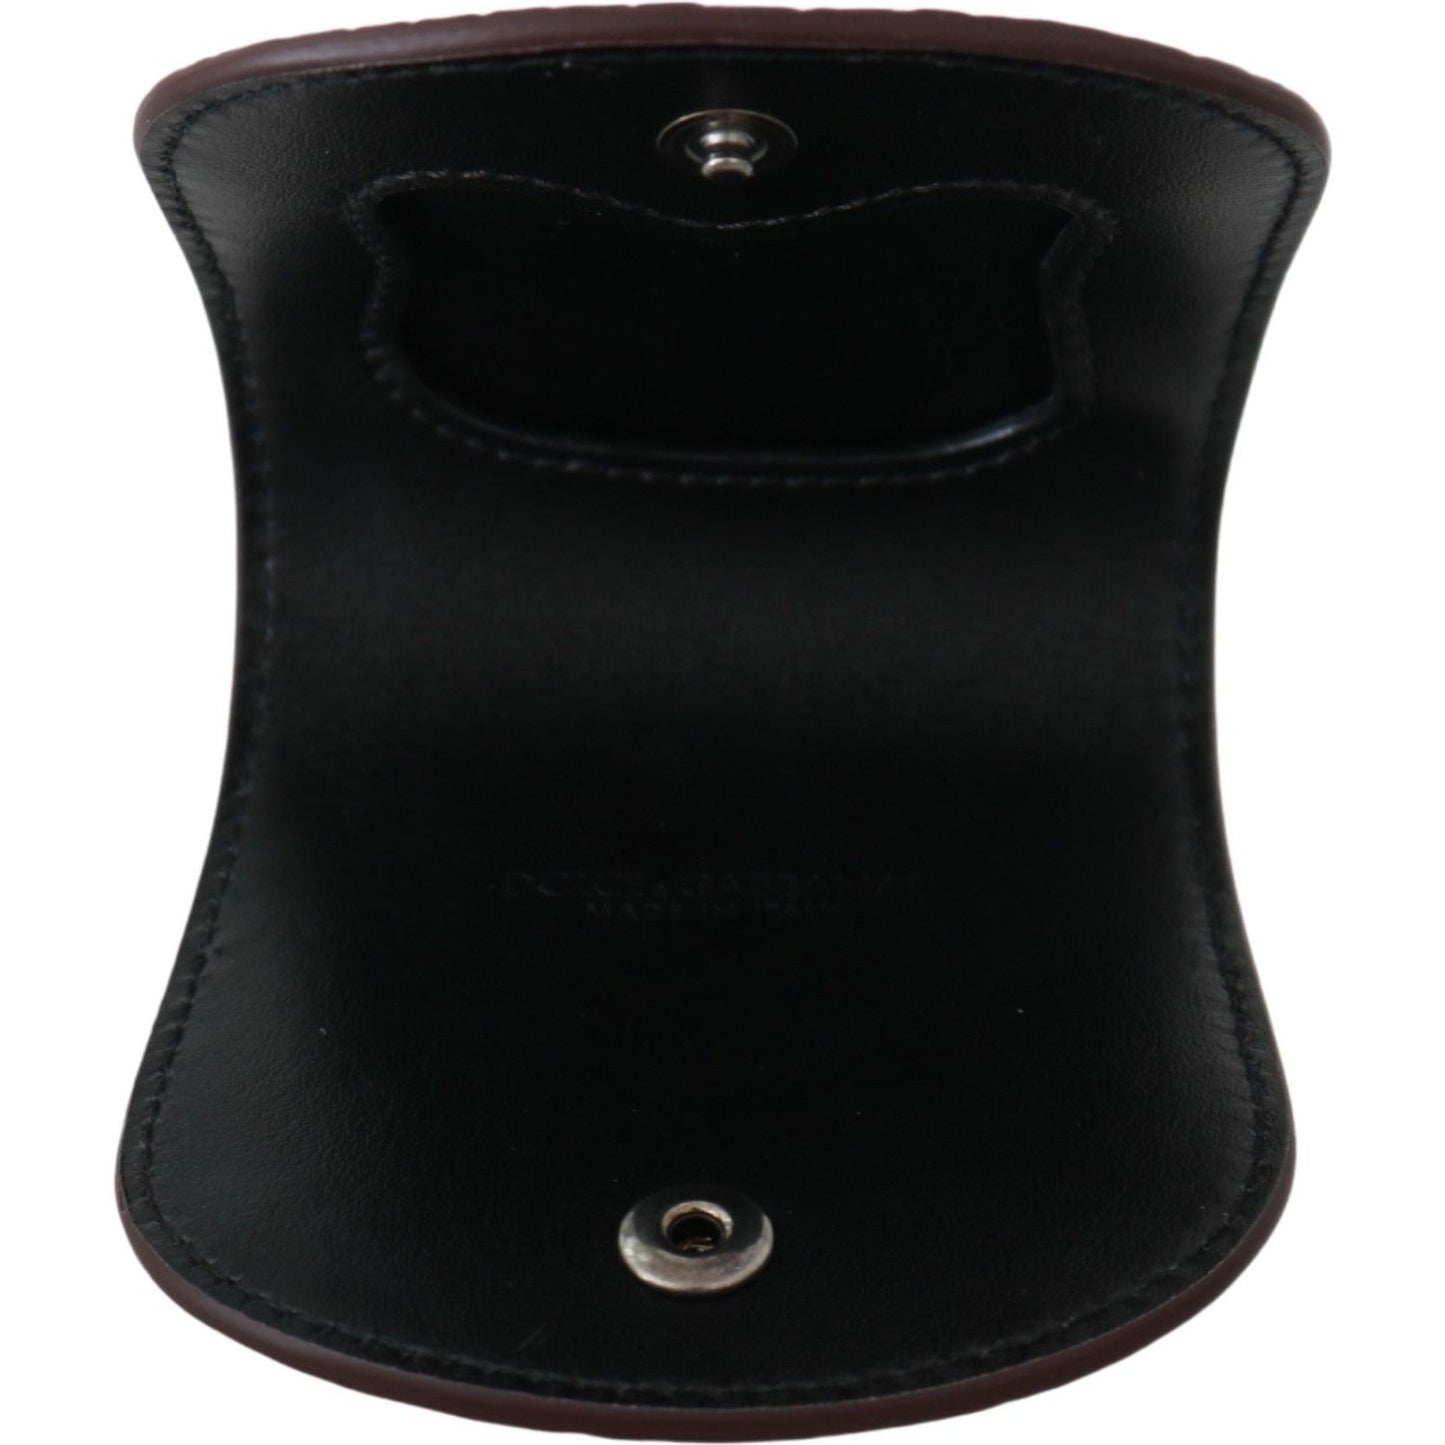 Dolce & Gabbana Refined Caimano Leather Coin Case Condom Case brown-exotic-skin-pocket-condom-case-holder